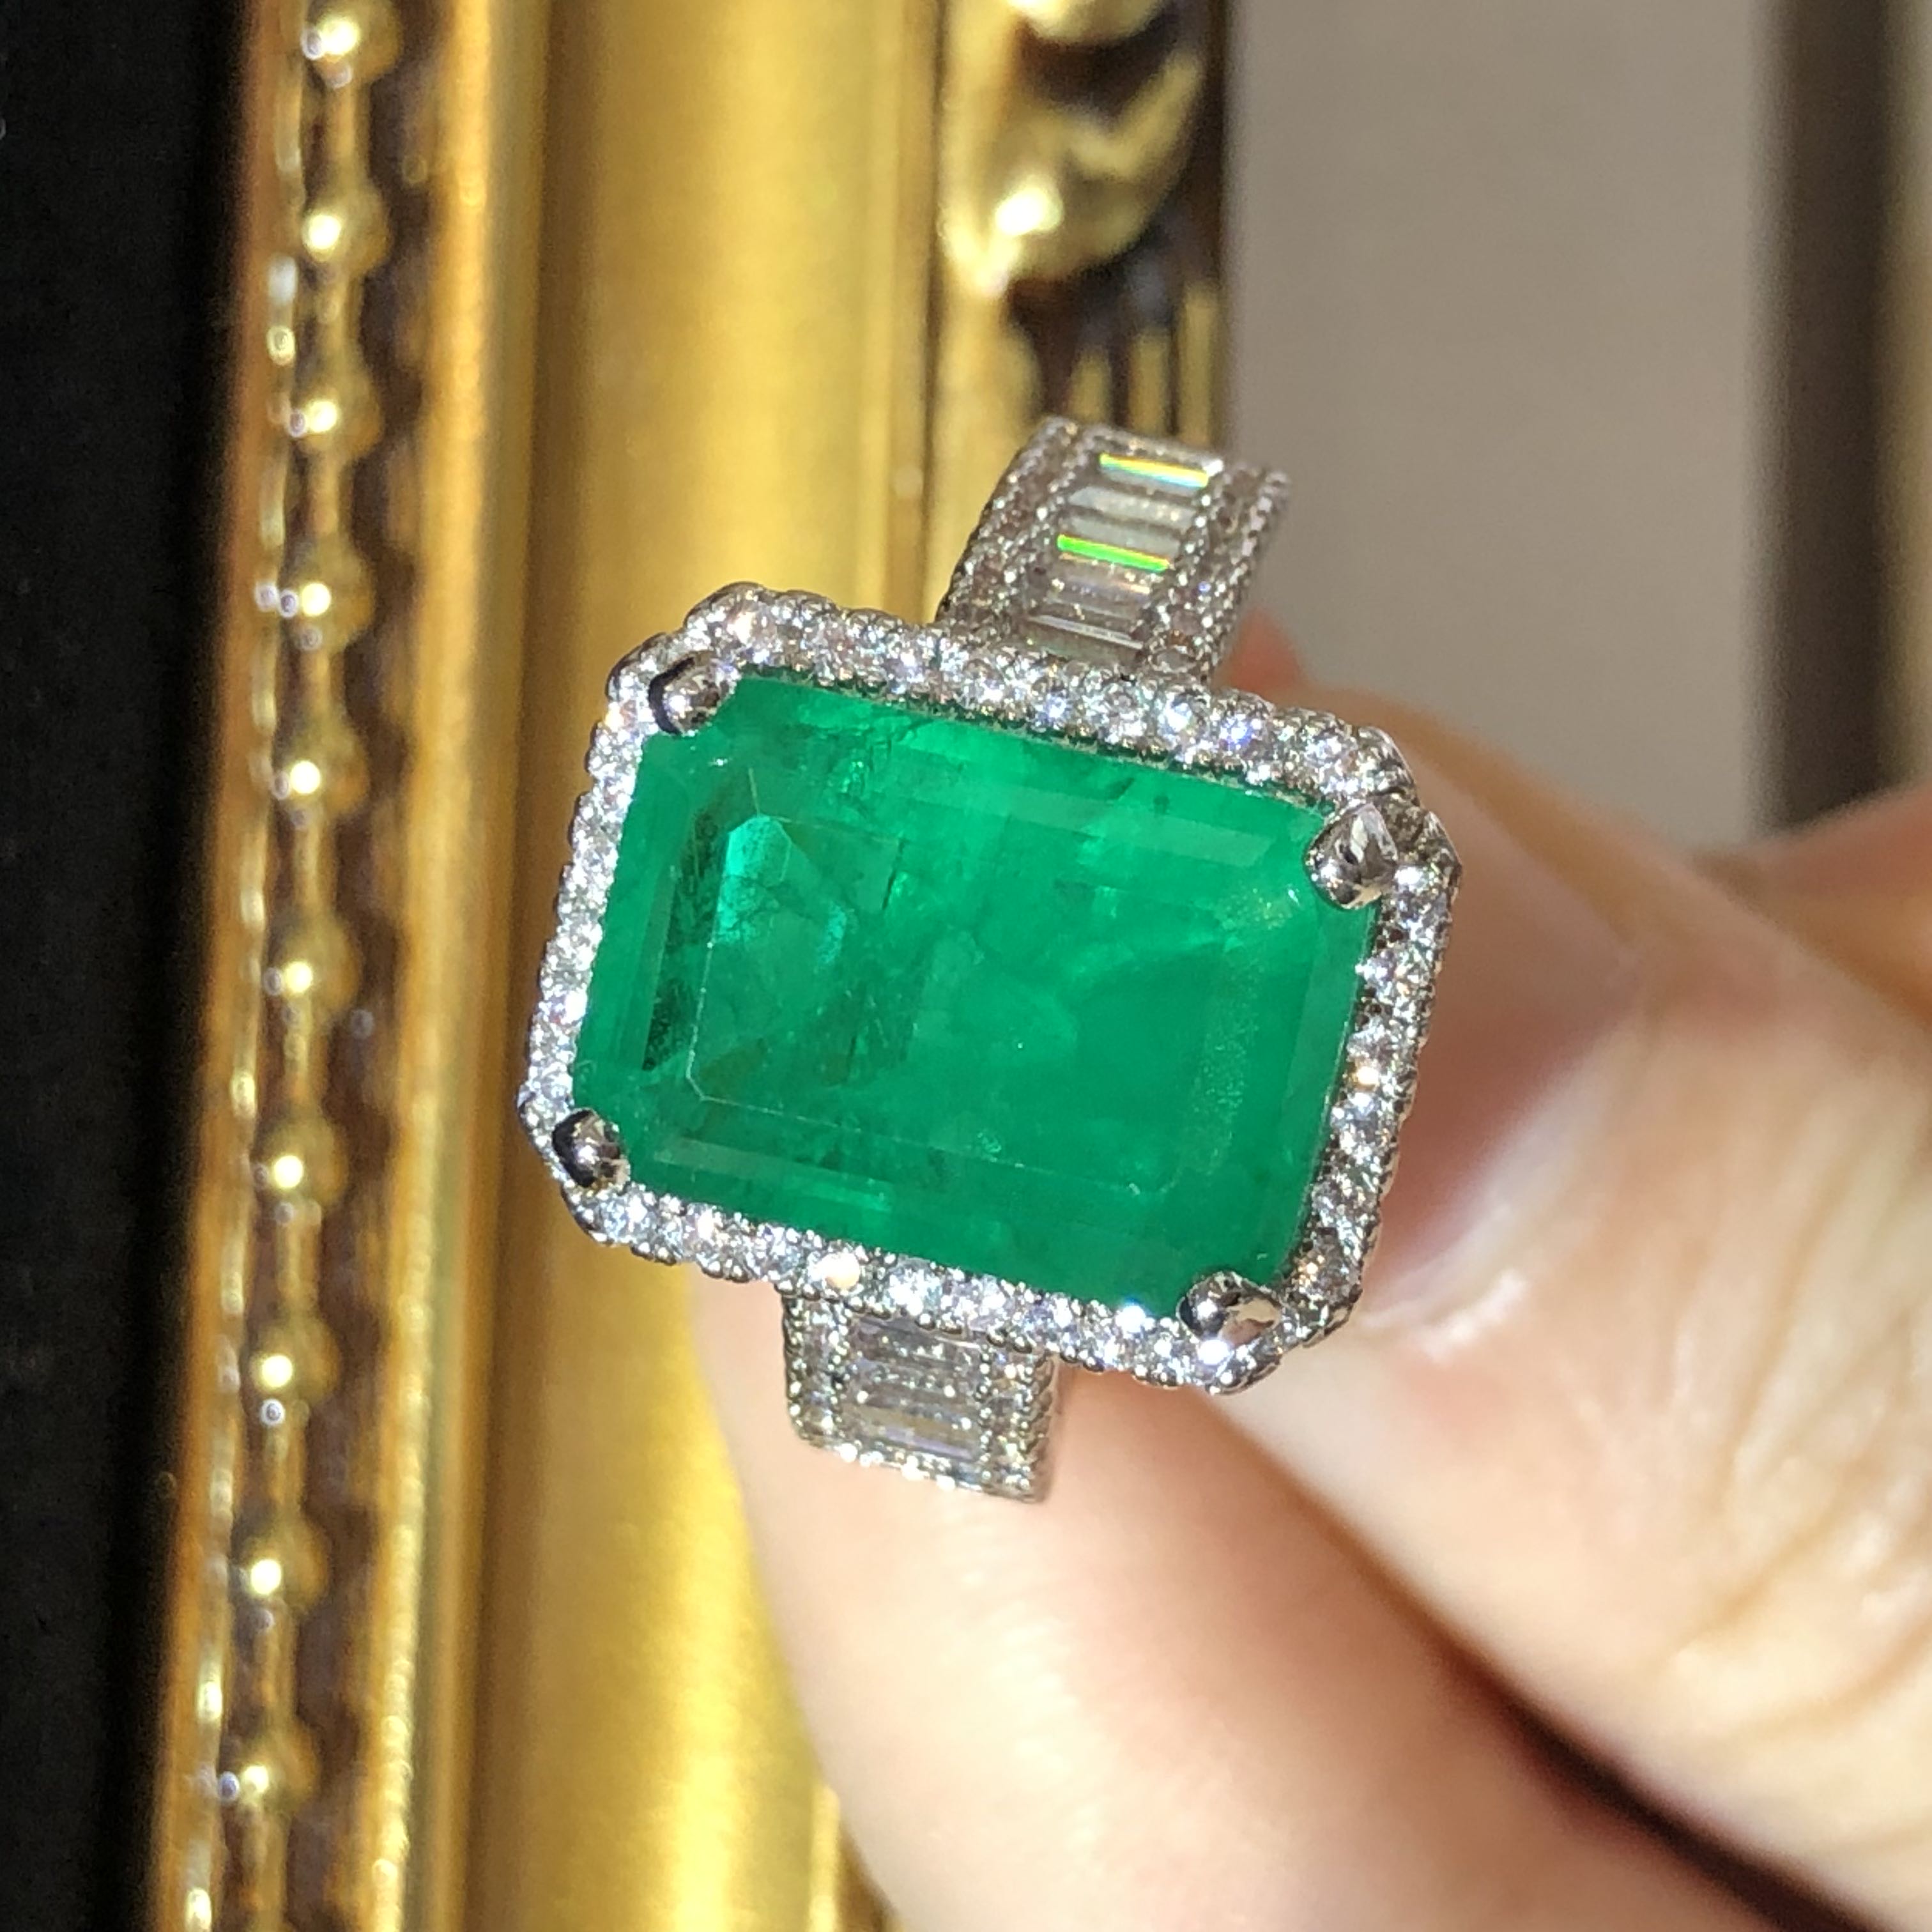 Tiviss Classic Ring - Emerald GreeN